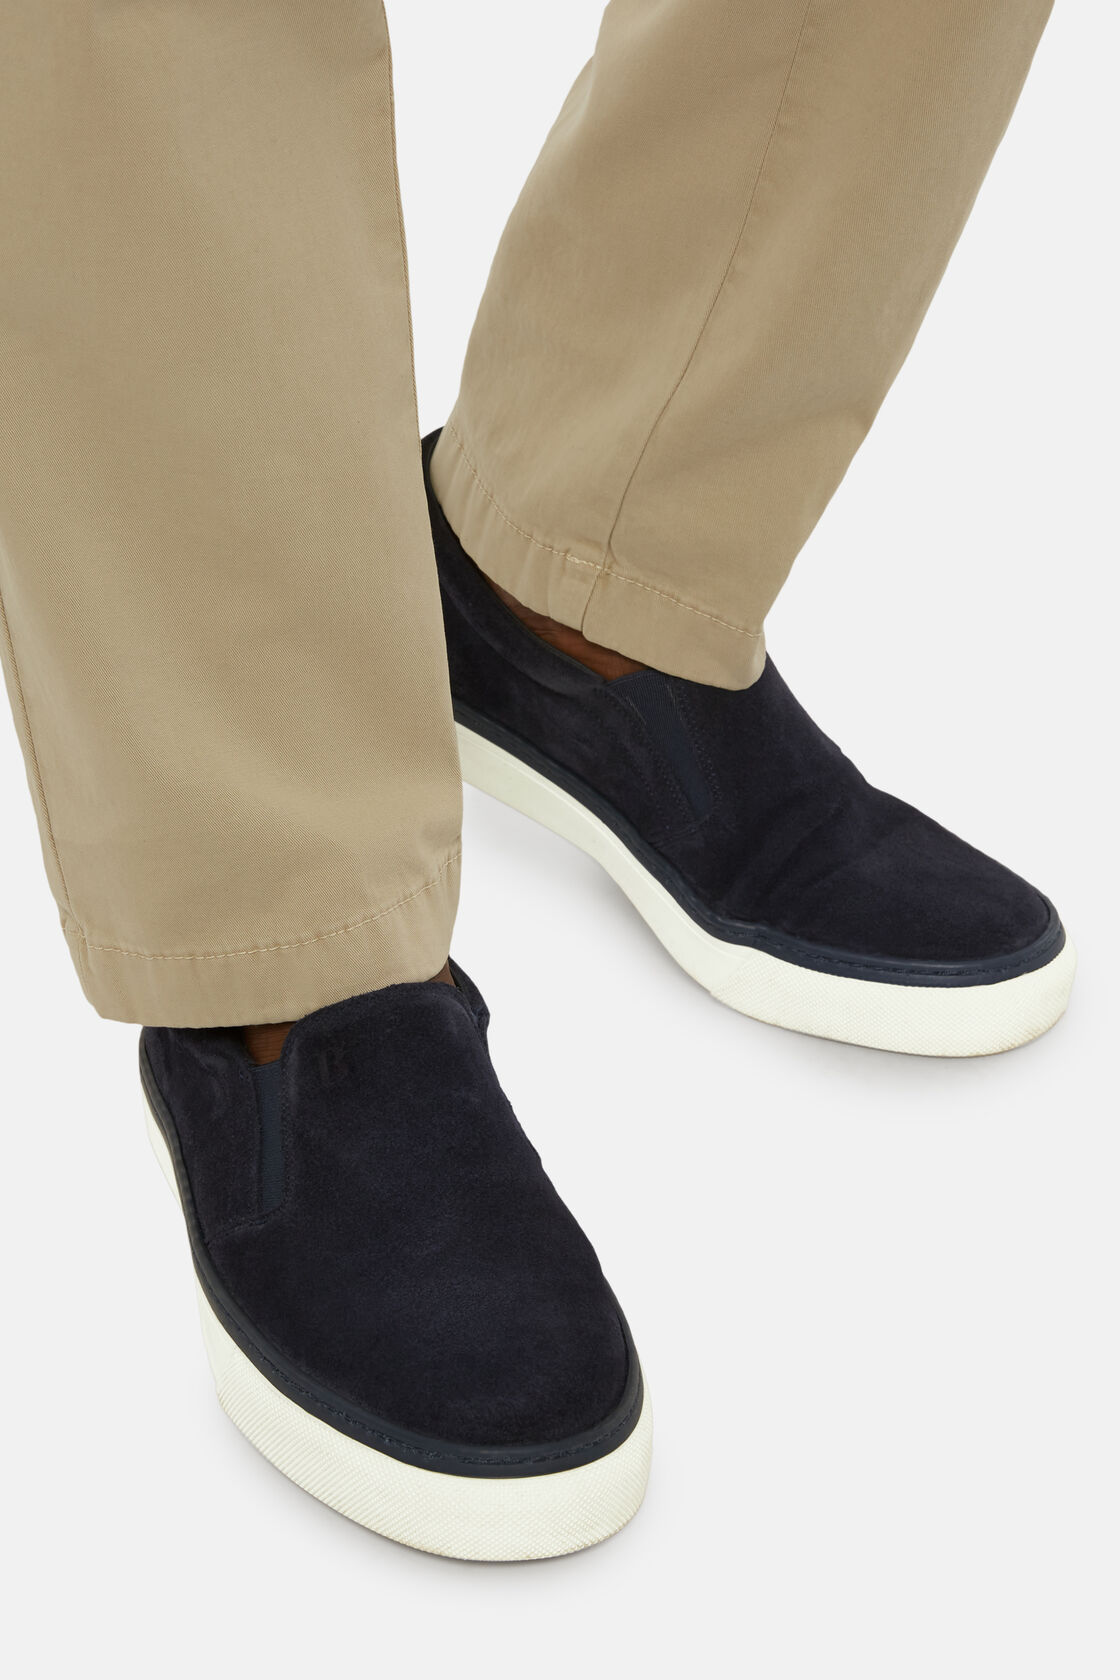 Navy Slip-Ons in Suede Leather, Navy blue, hi-res